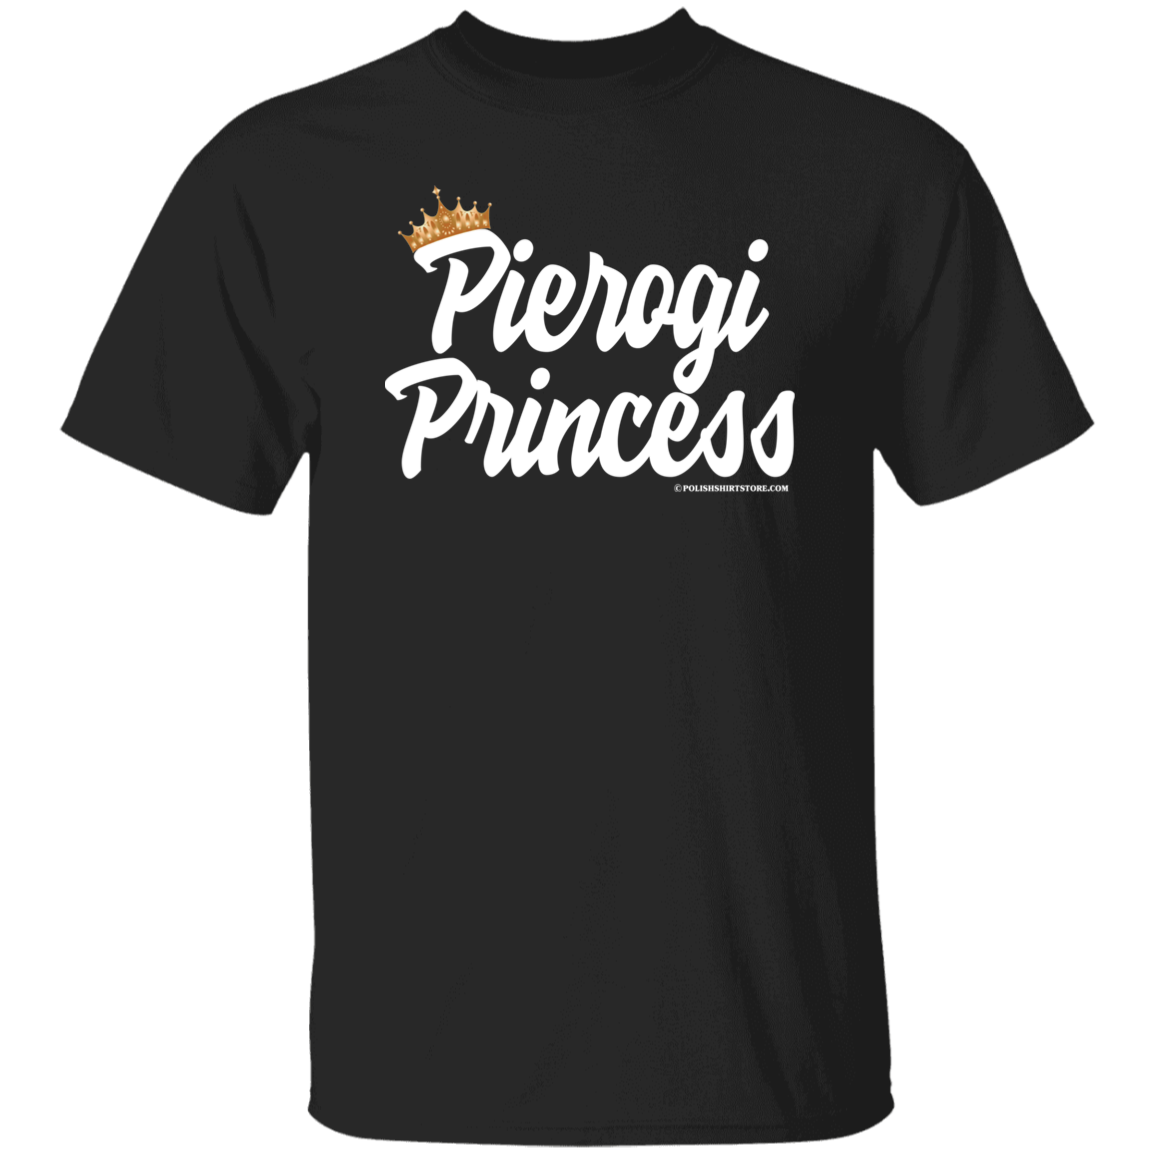 Pierogi Princess T-Shirt Apparel CustomCat G500 5.3 oz. T-Shirt Black S